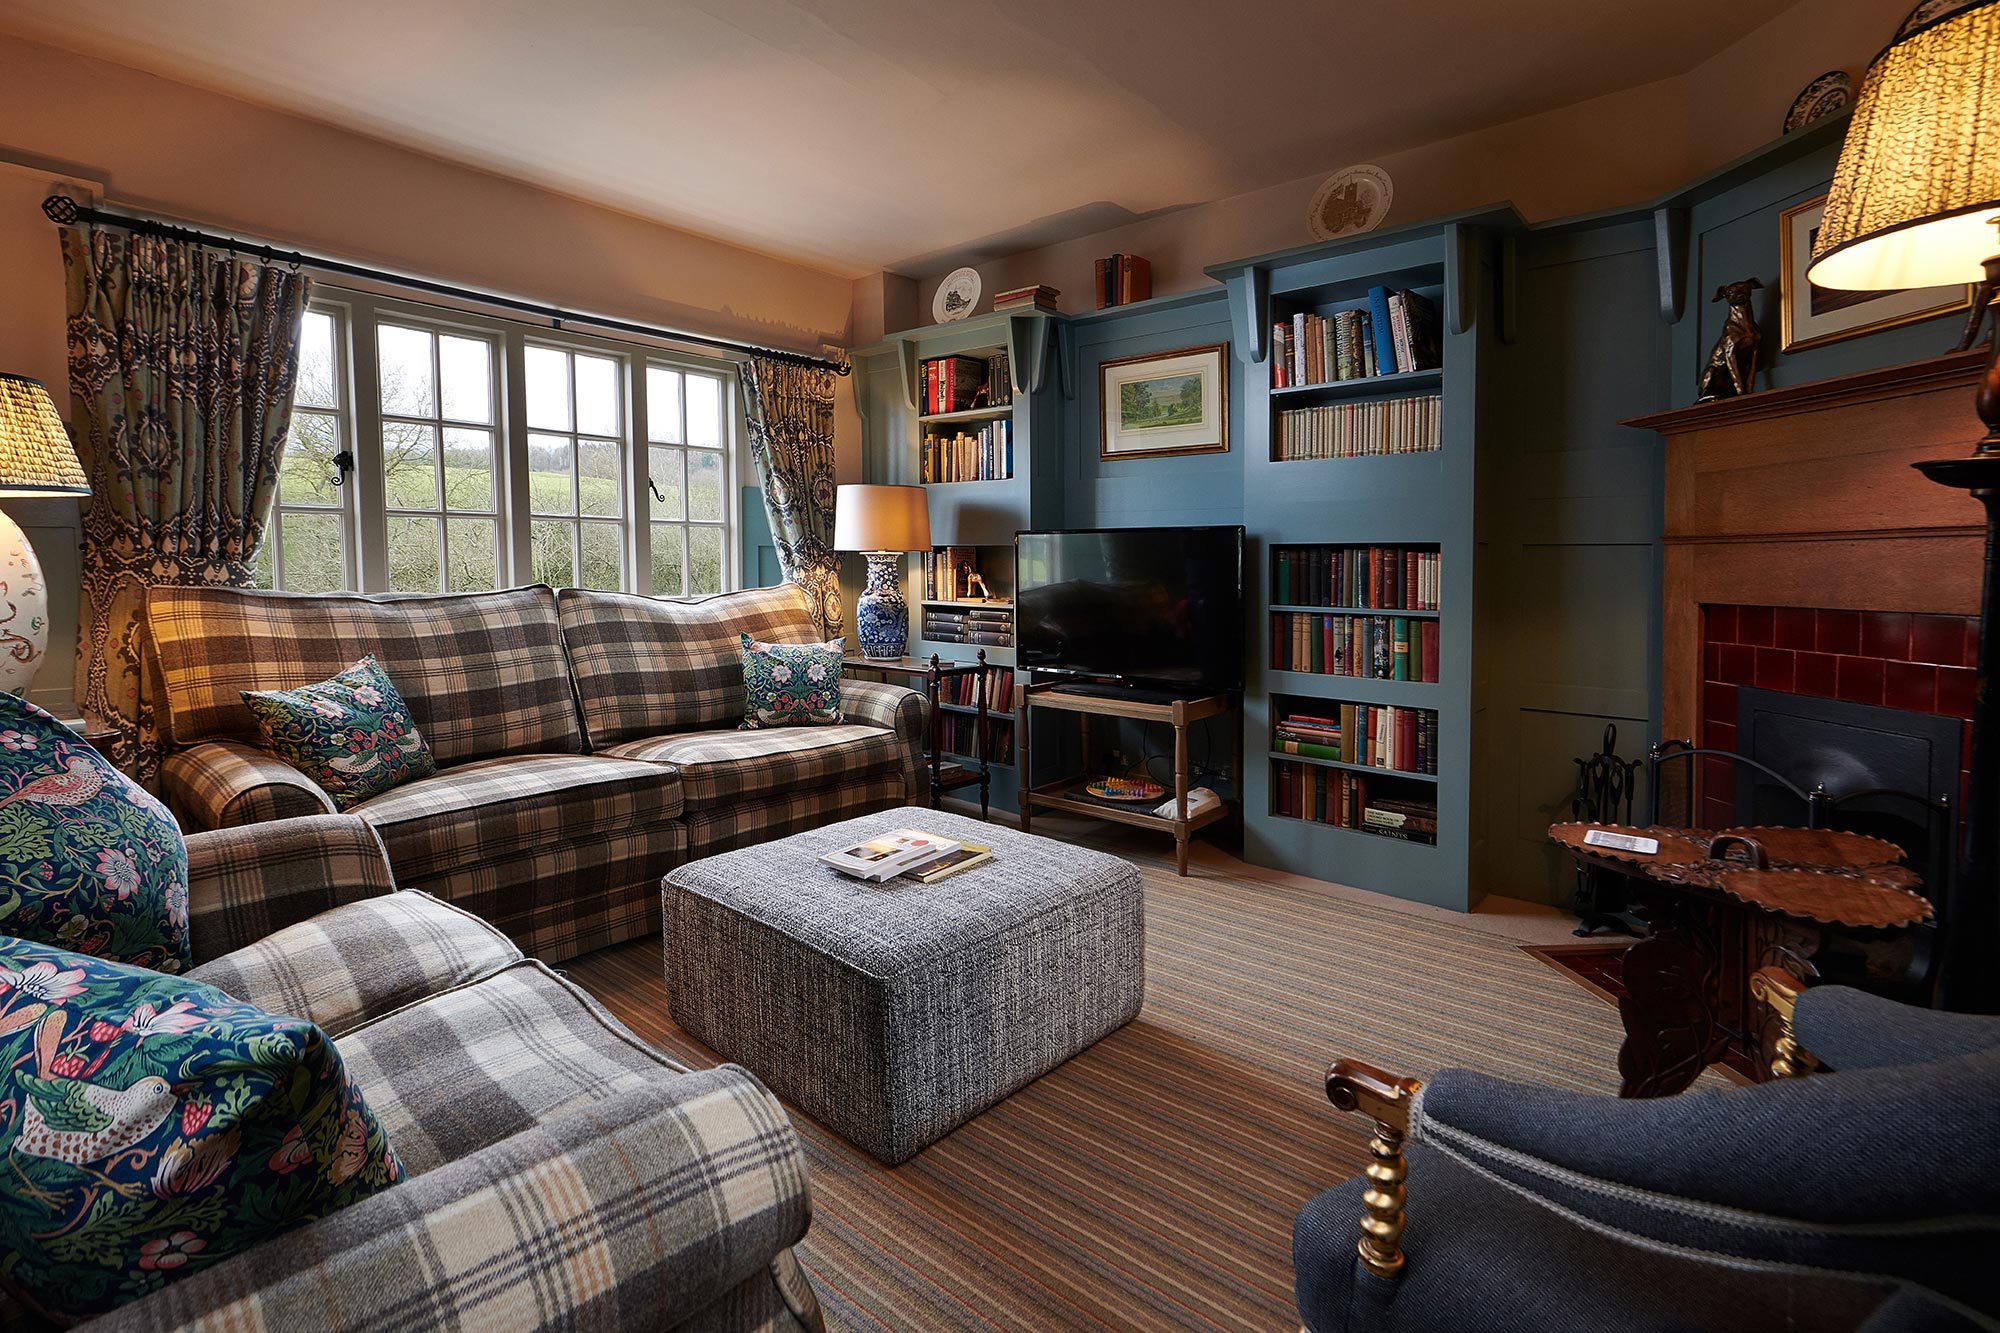 moor view holiday cottage interior by Rachel McLane Ltd